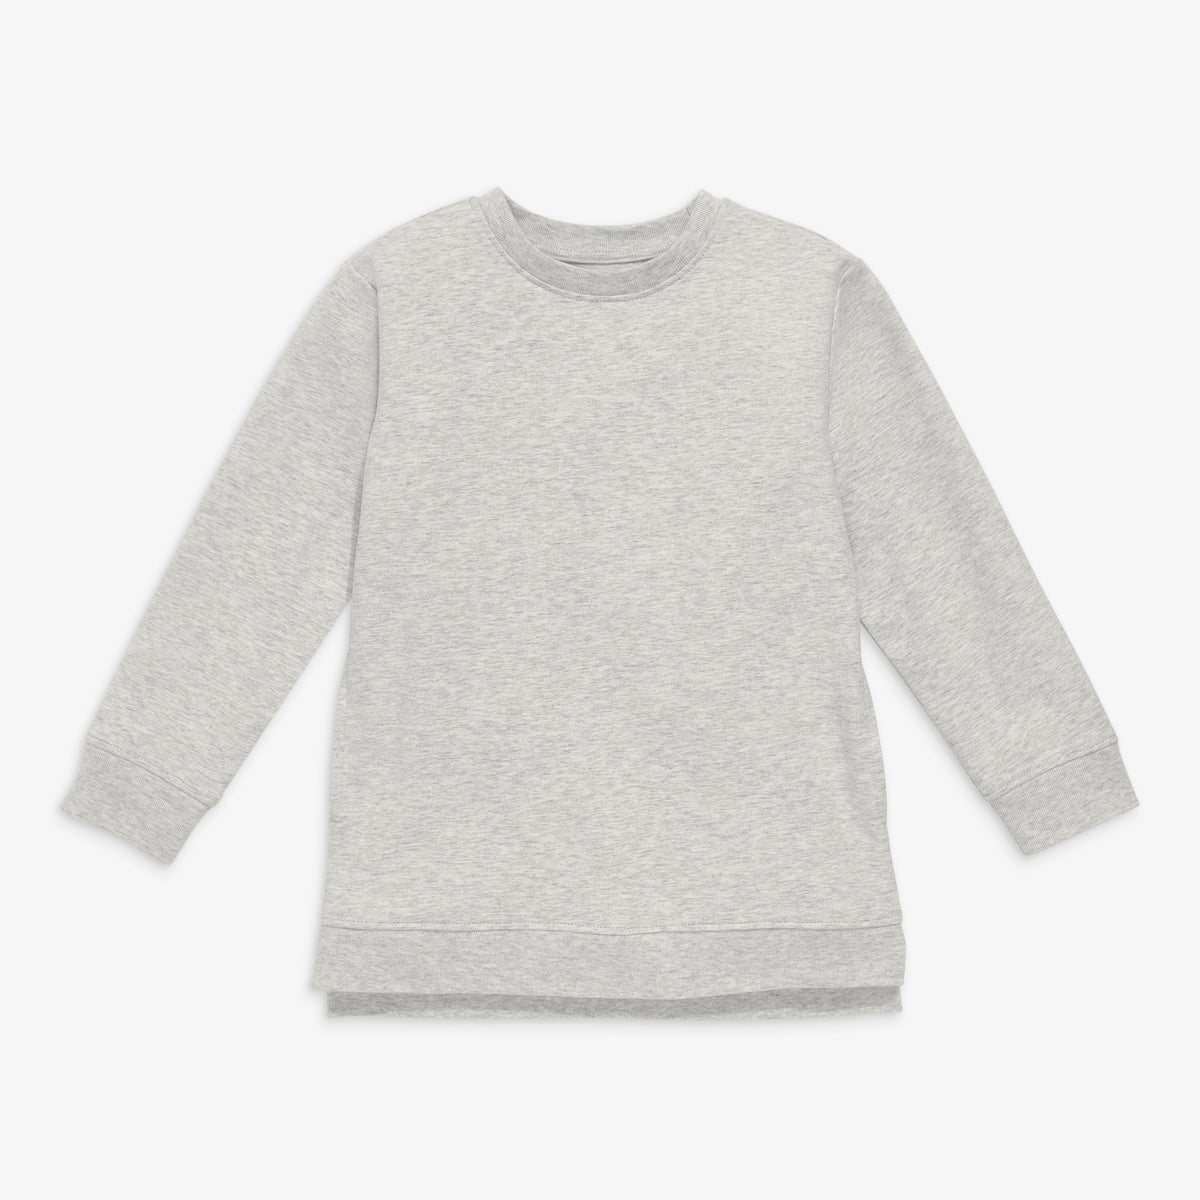 Pocket tunic sweatshirt | Primary.com